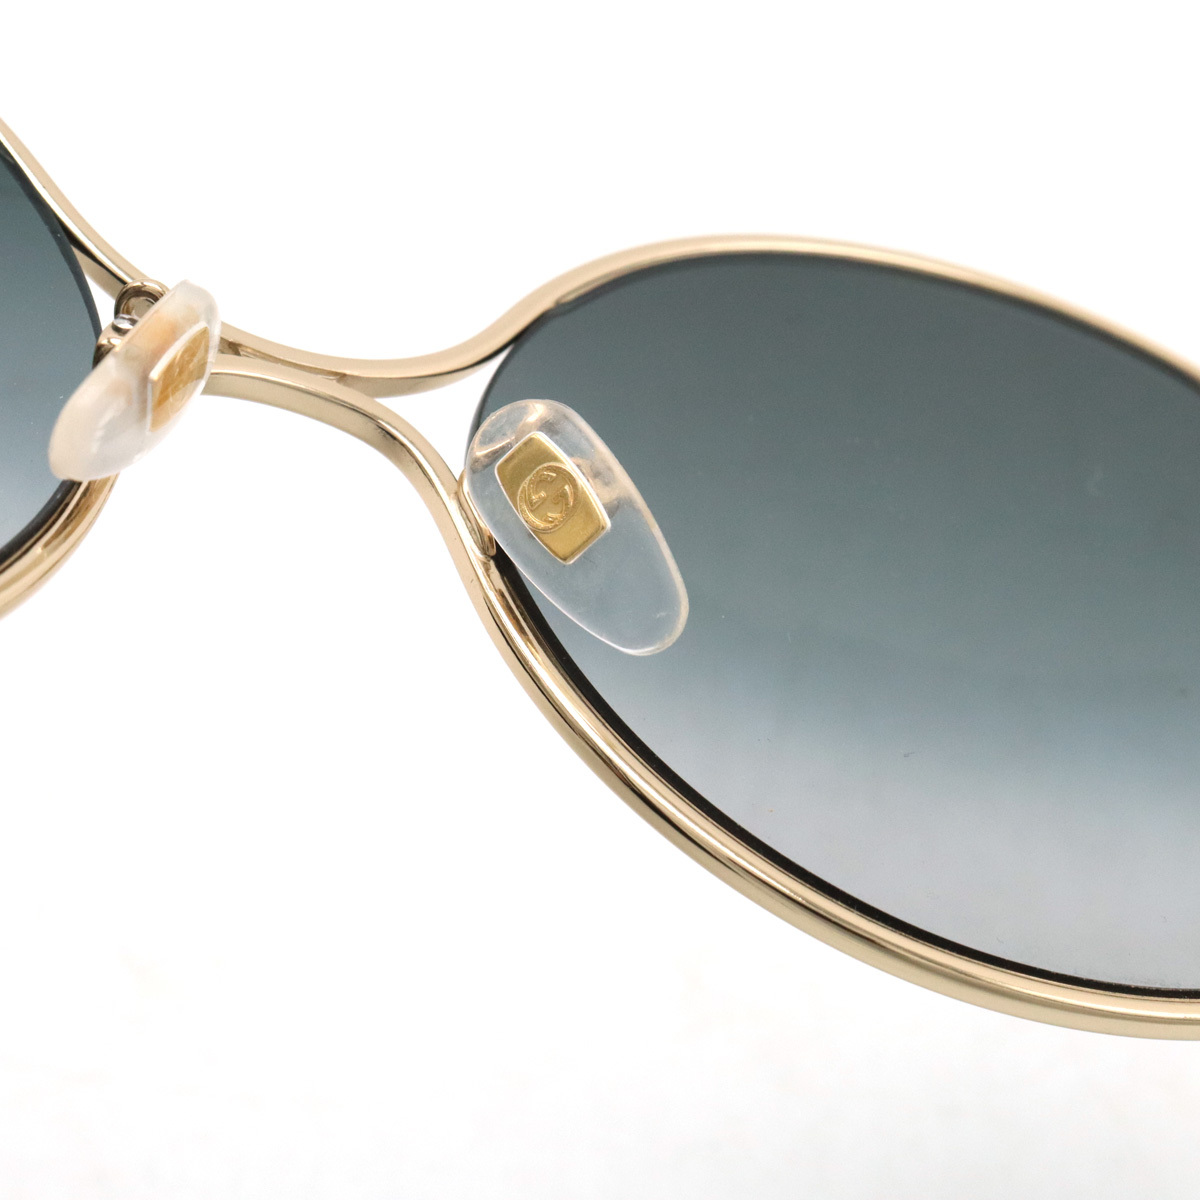 GUCCI Gucci GG pearl sunglasses I we around Shape Alessandro mike-re design smoked gradation 